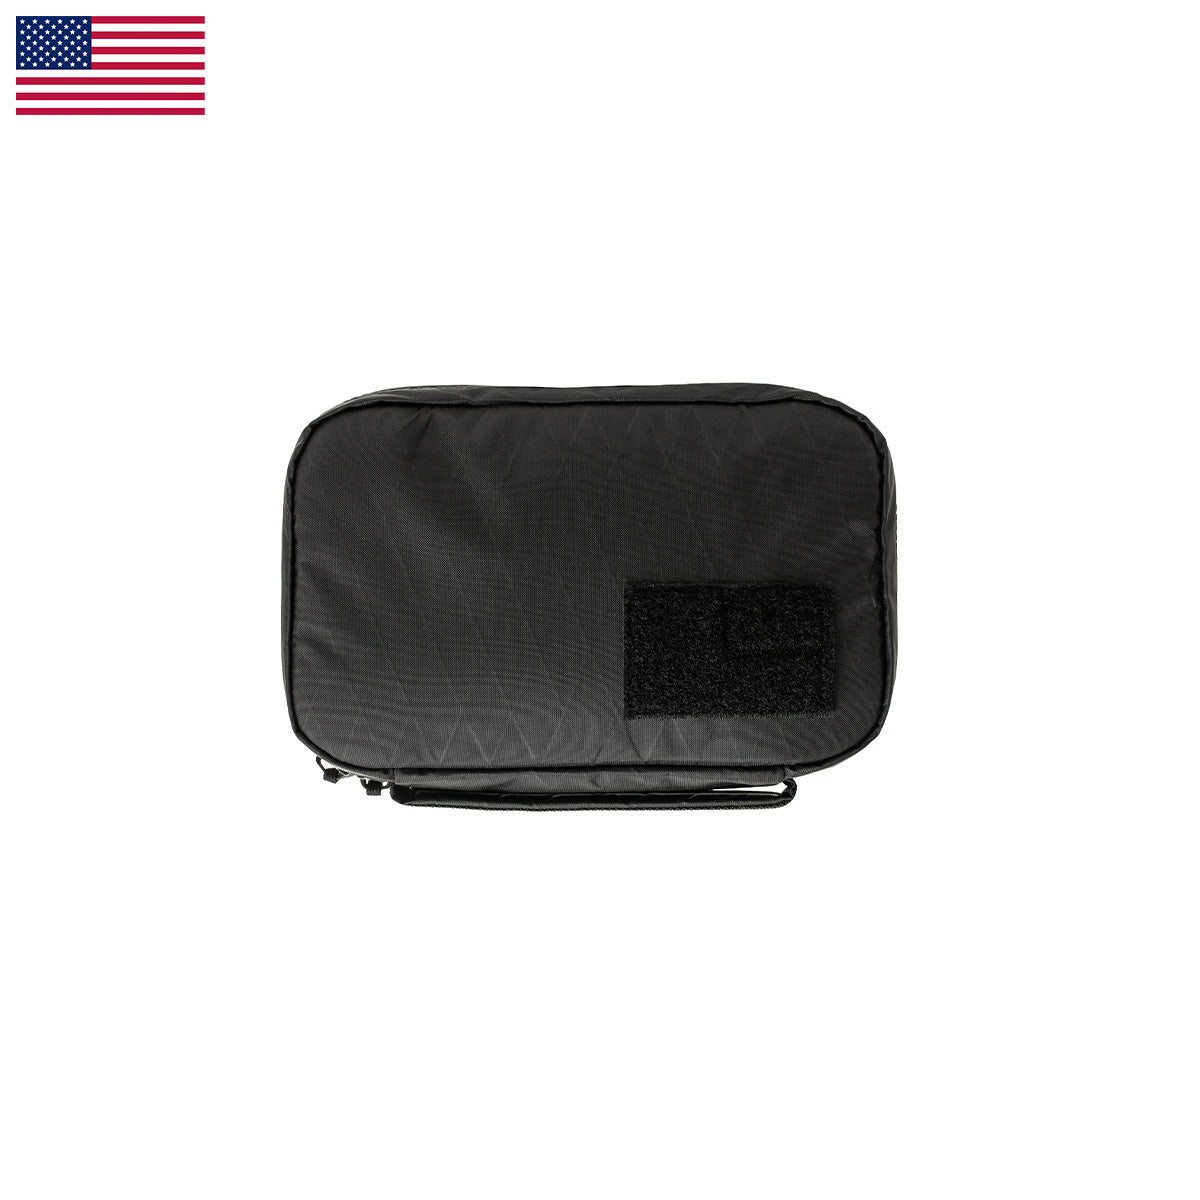 GR1 Field Pocket X-PAC - USA